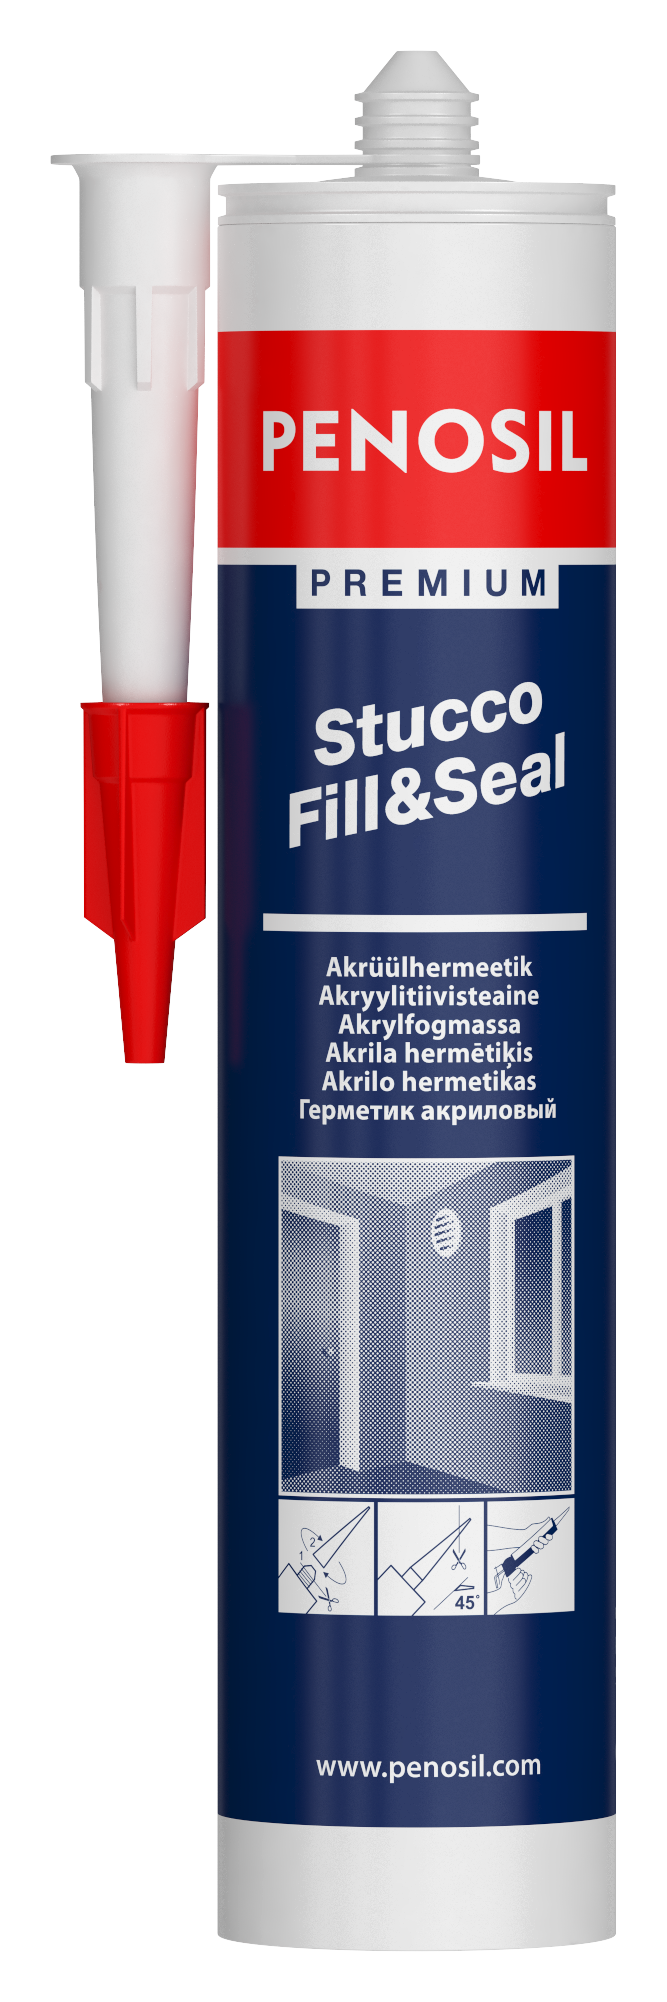 Premium Stucco Fill&Seal